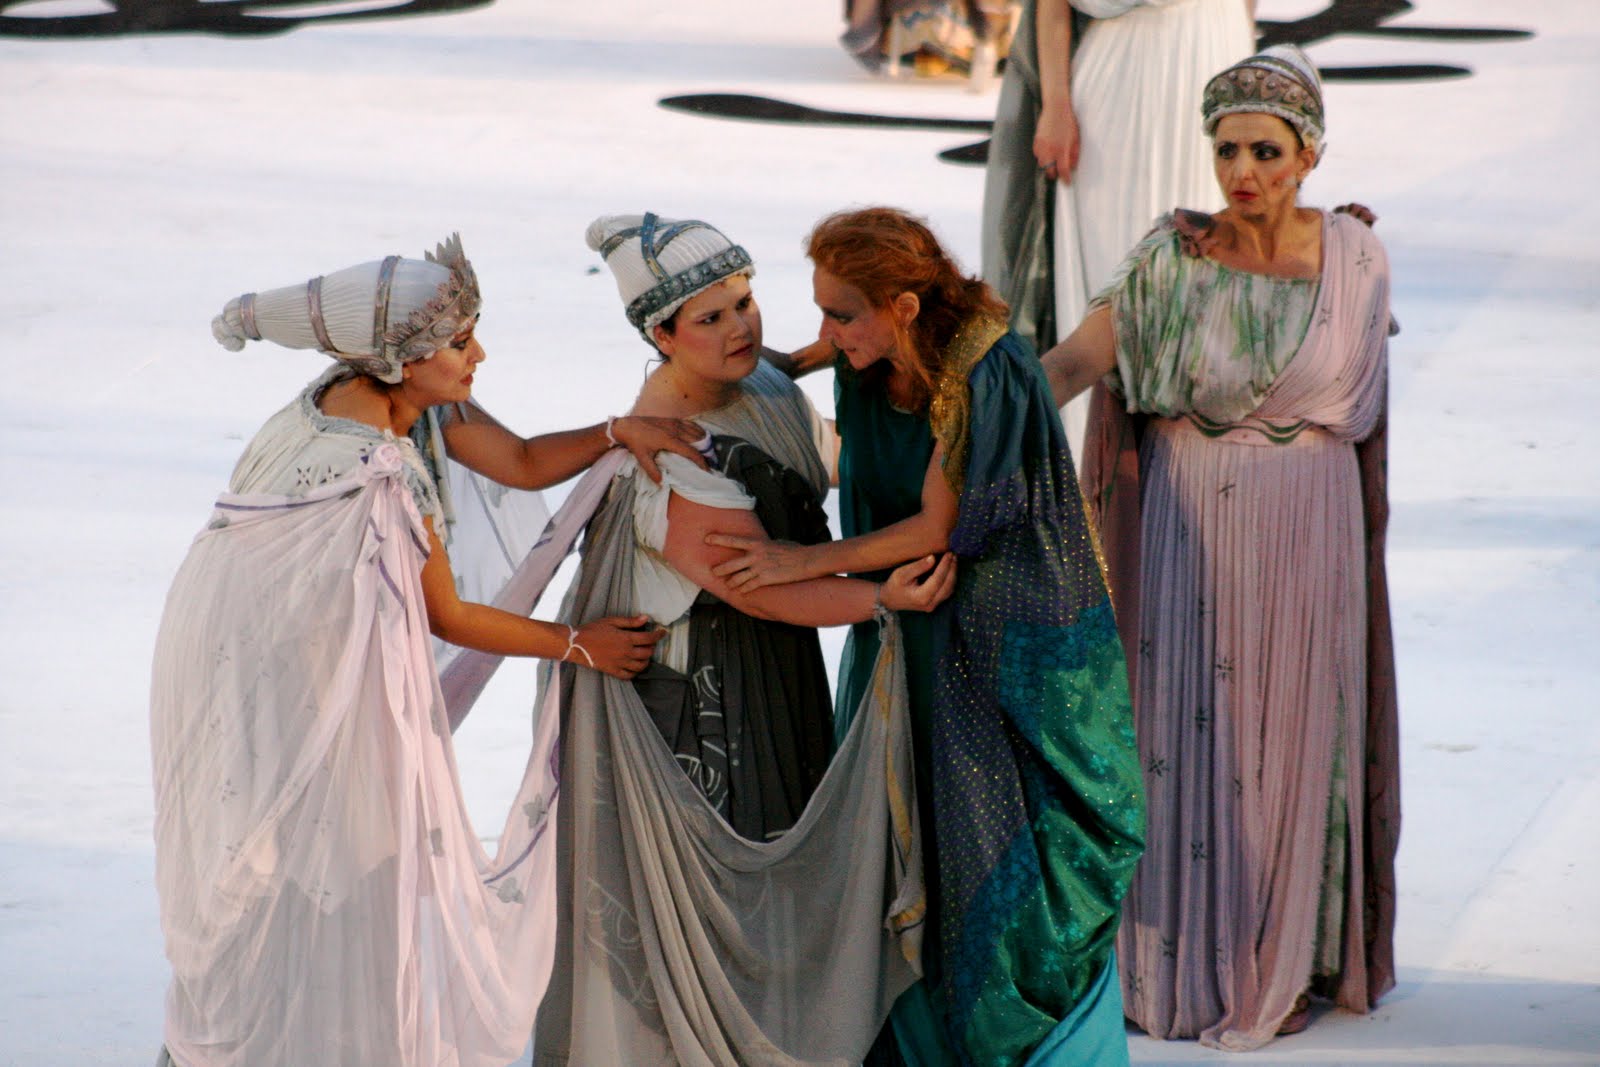 Caltanissetta: Oasi della Cultura, in scena Argonauti, Giasone e Medea